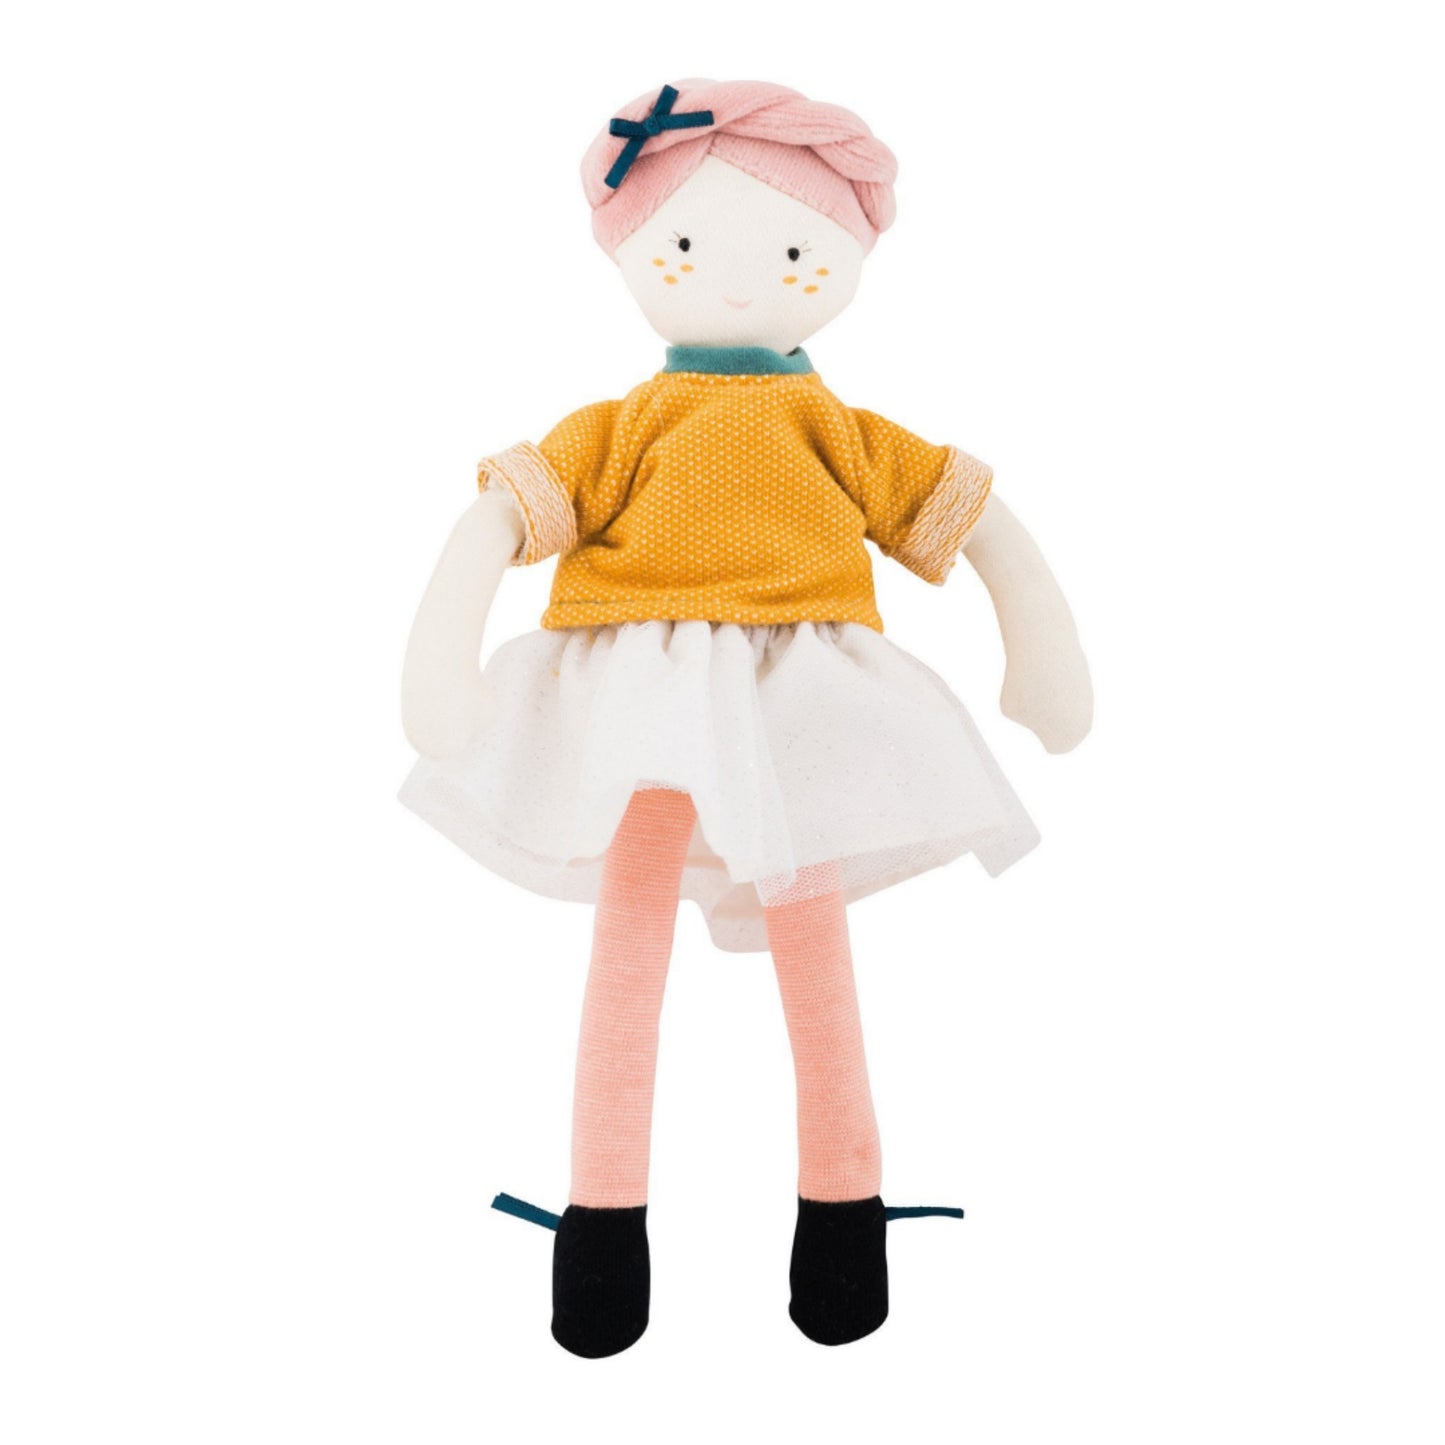 Mademoiselle Eloise 10" Soft Doll